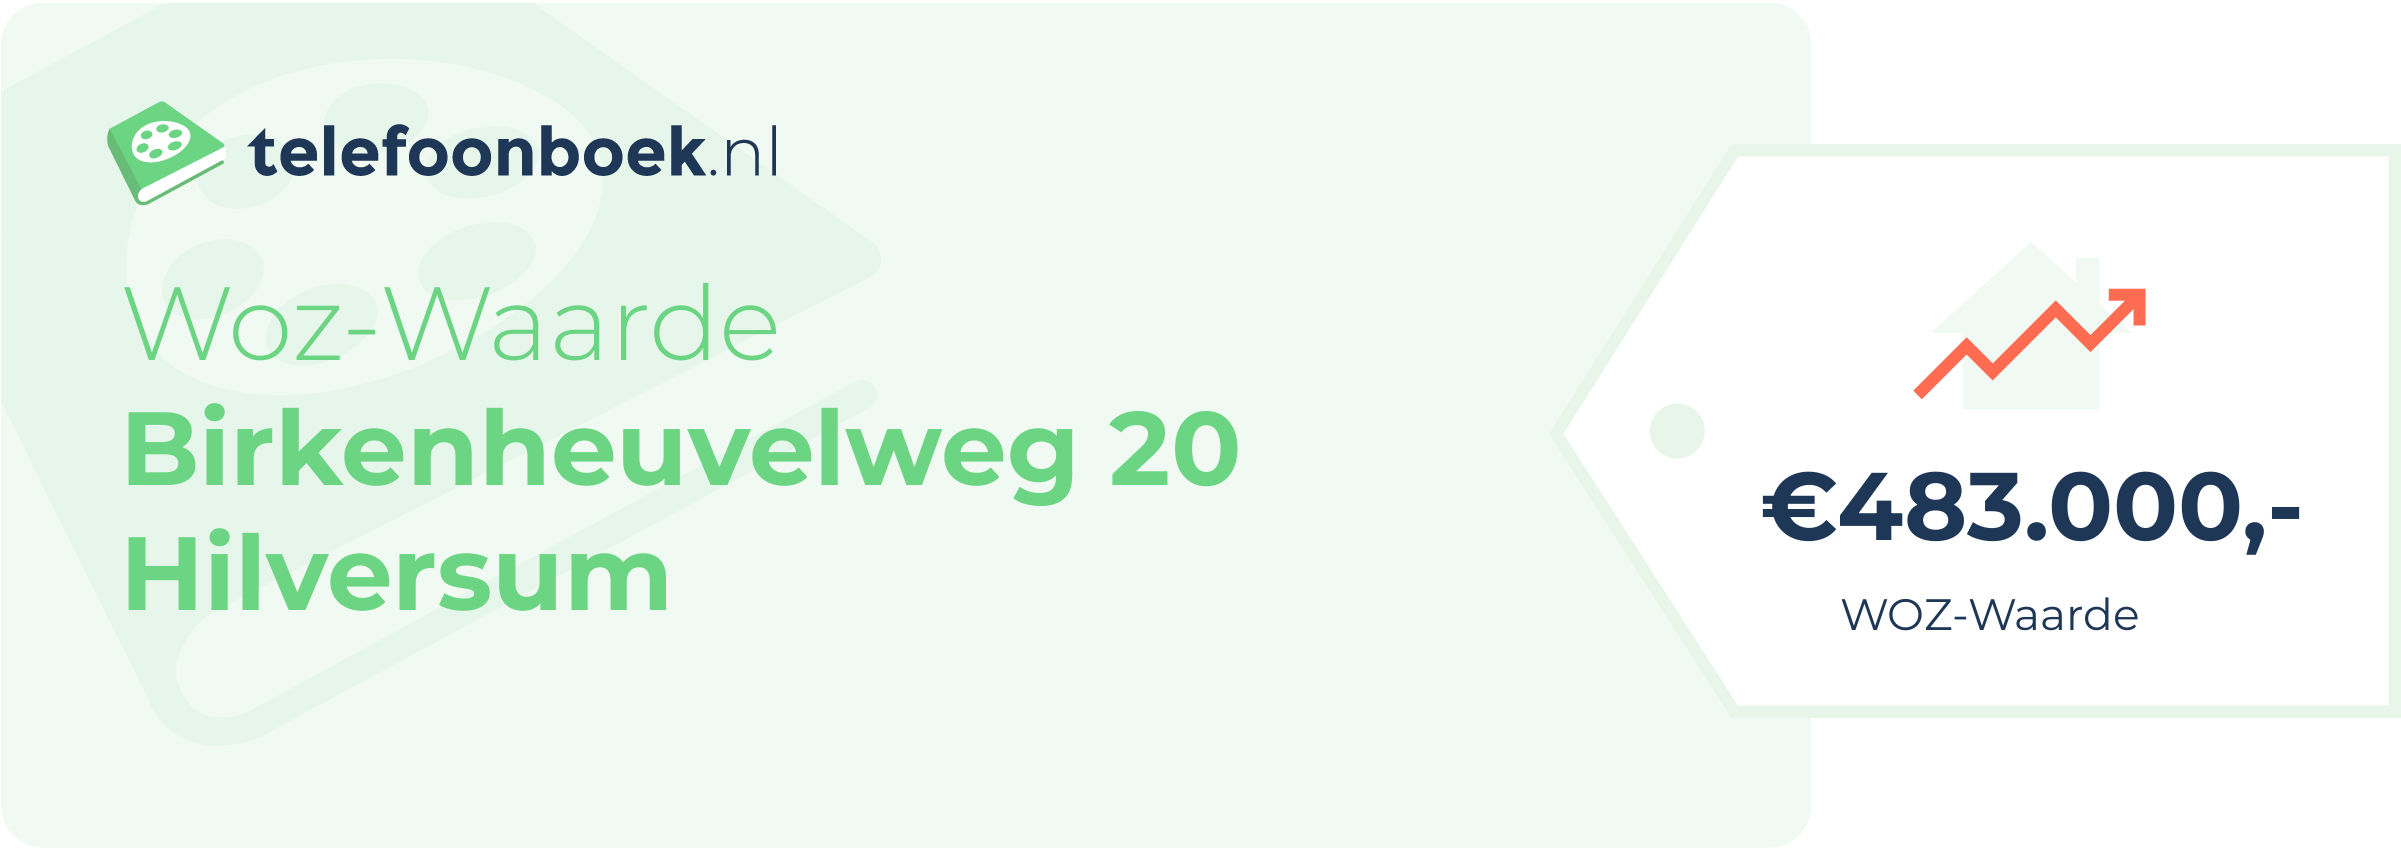 WOZ-waarde Birkenheuvelweg 20 Hilversum